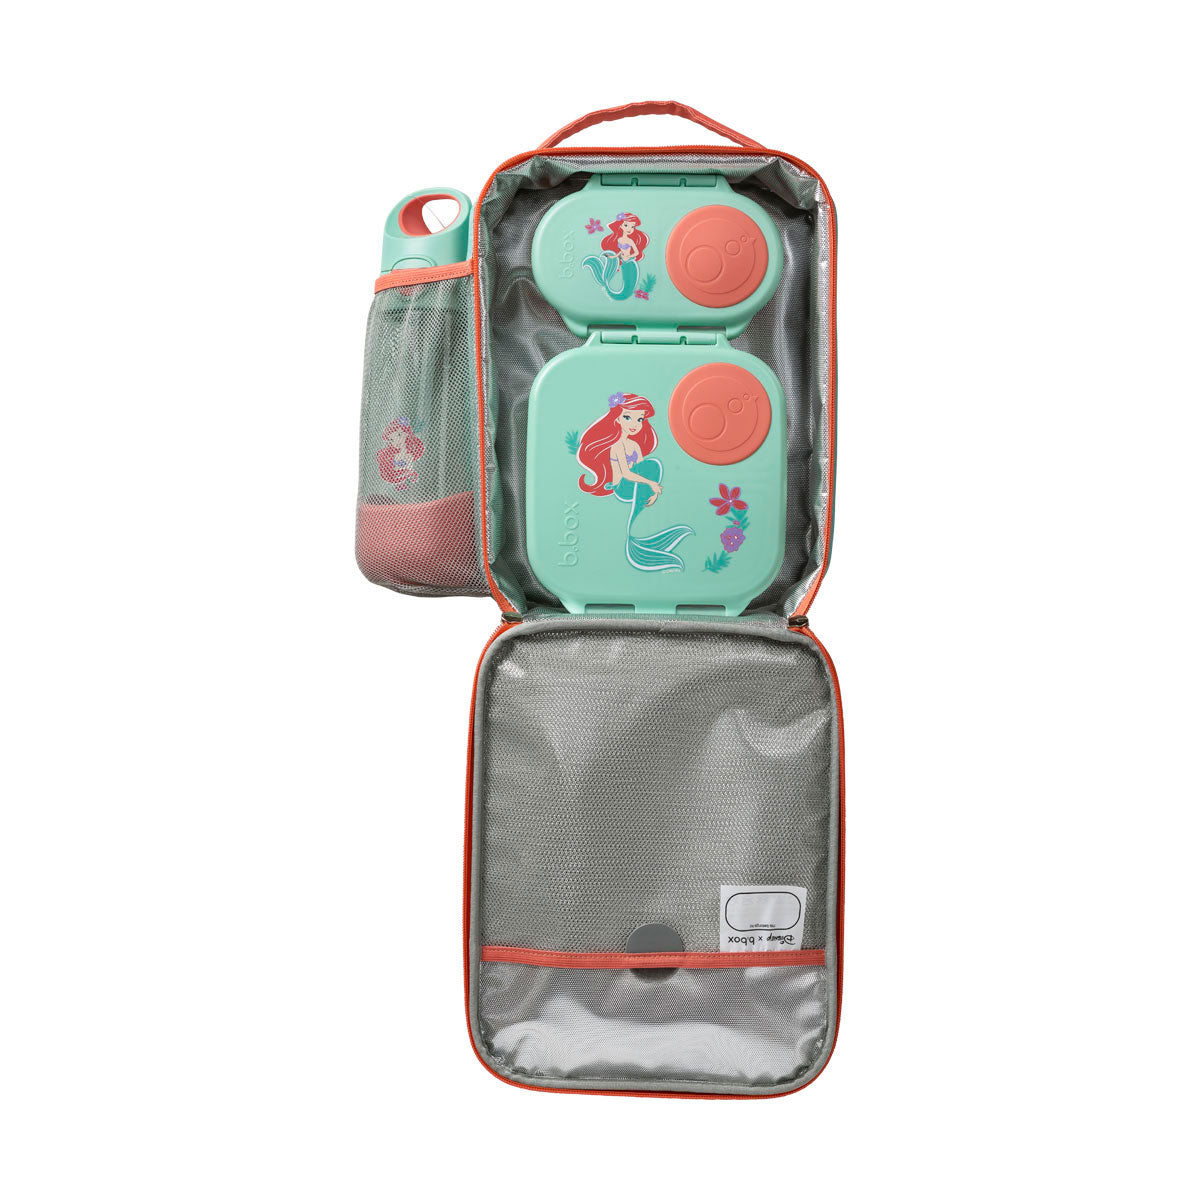 b.box Flexi Insulated Lunch Bag- The Little Mermaid